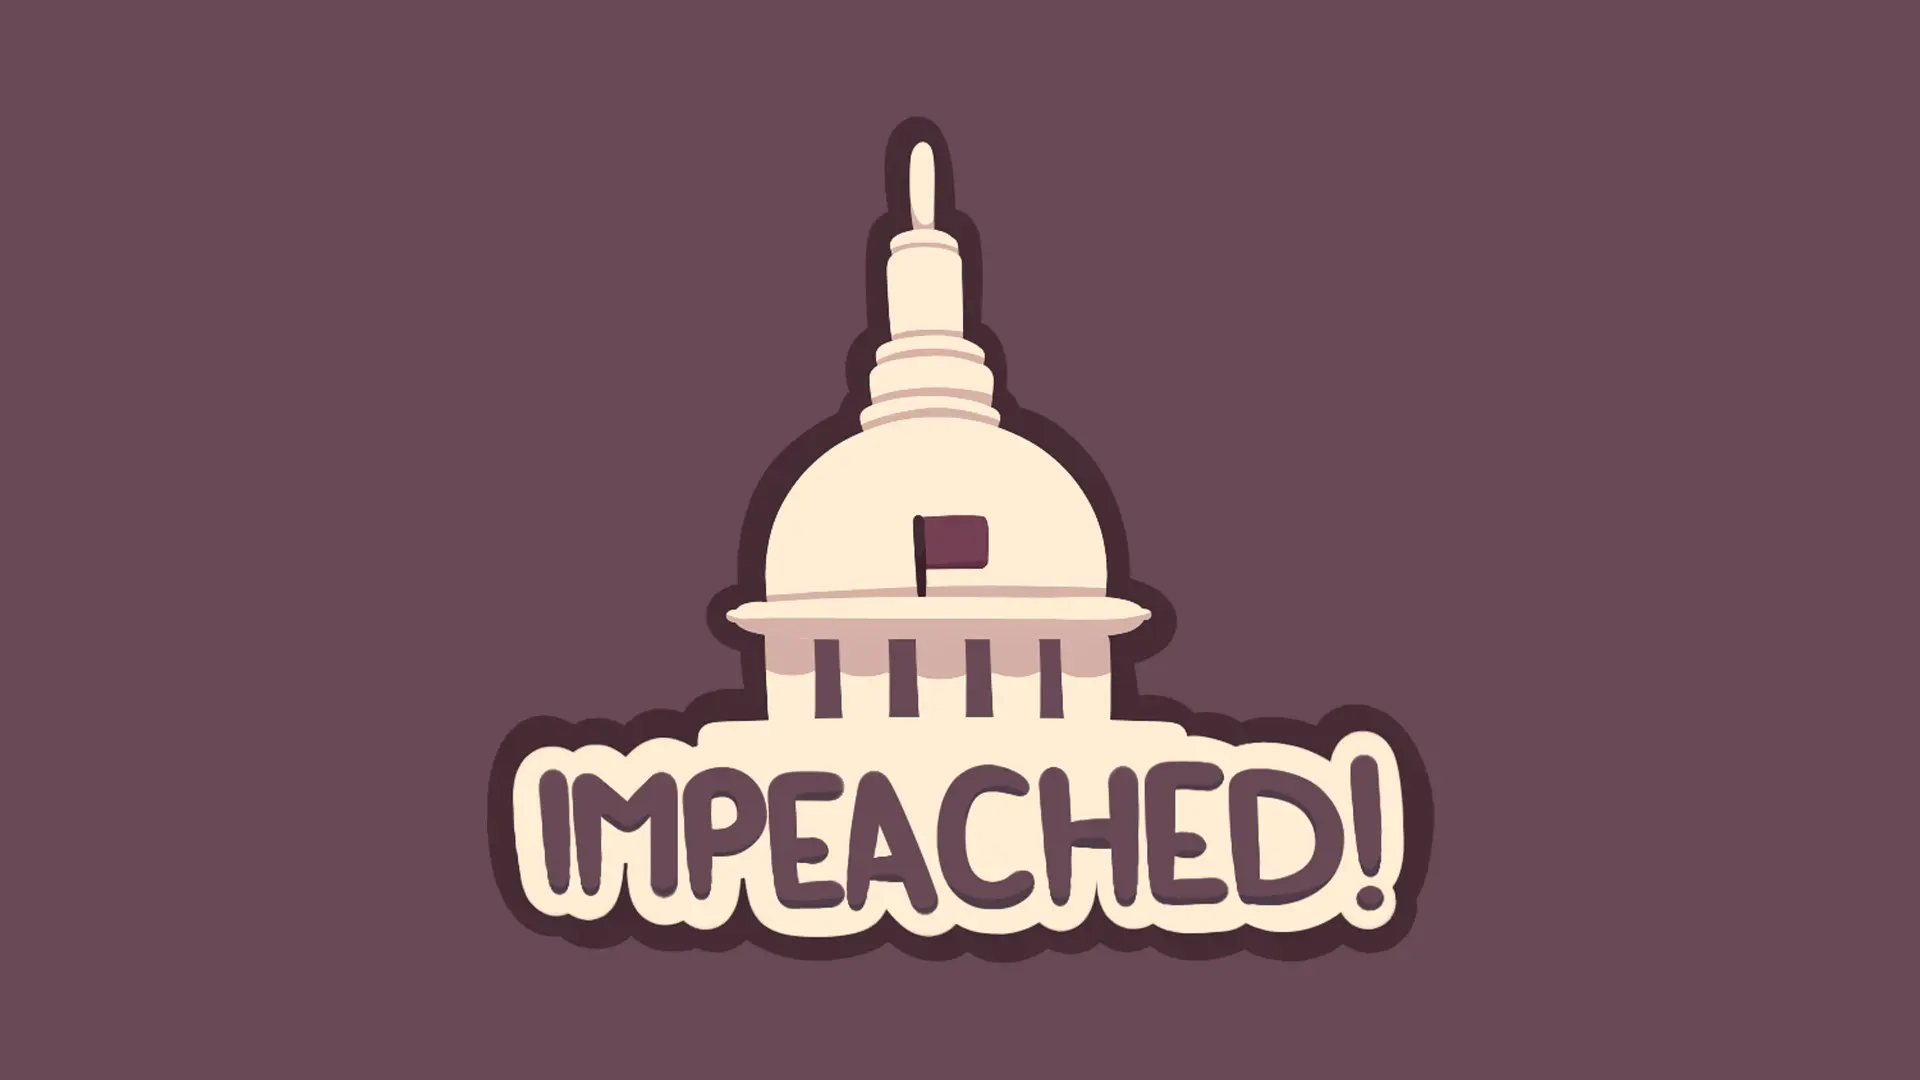 Impeached: Jadi Presiden Itu Gak Mudah, Bro!